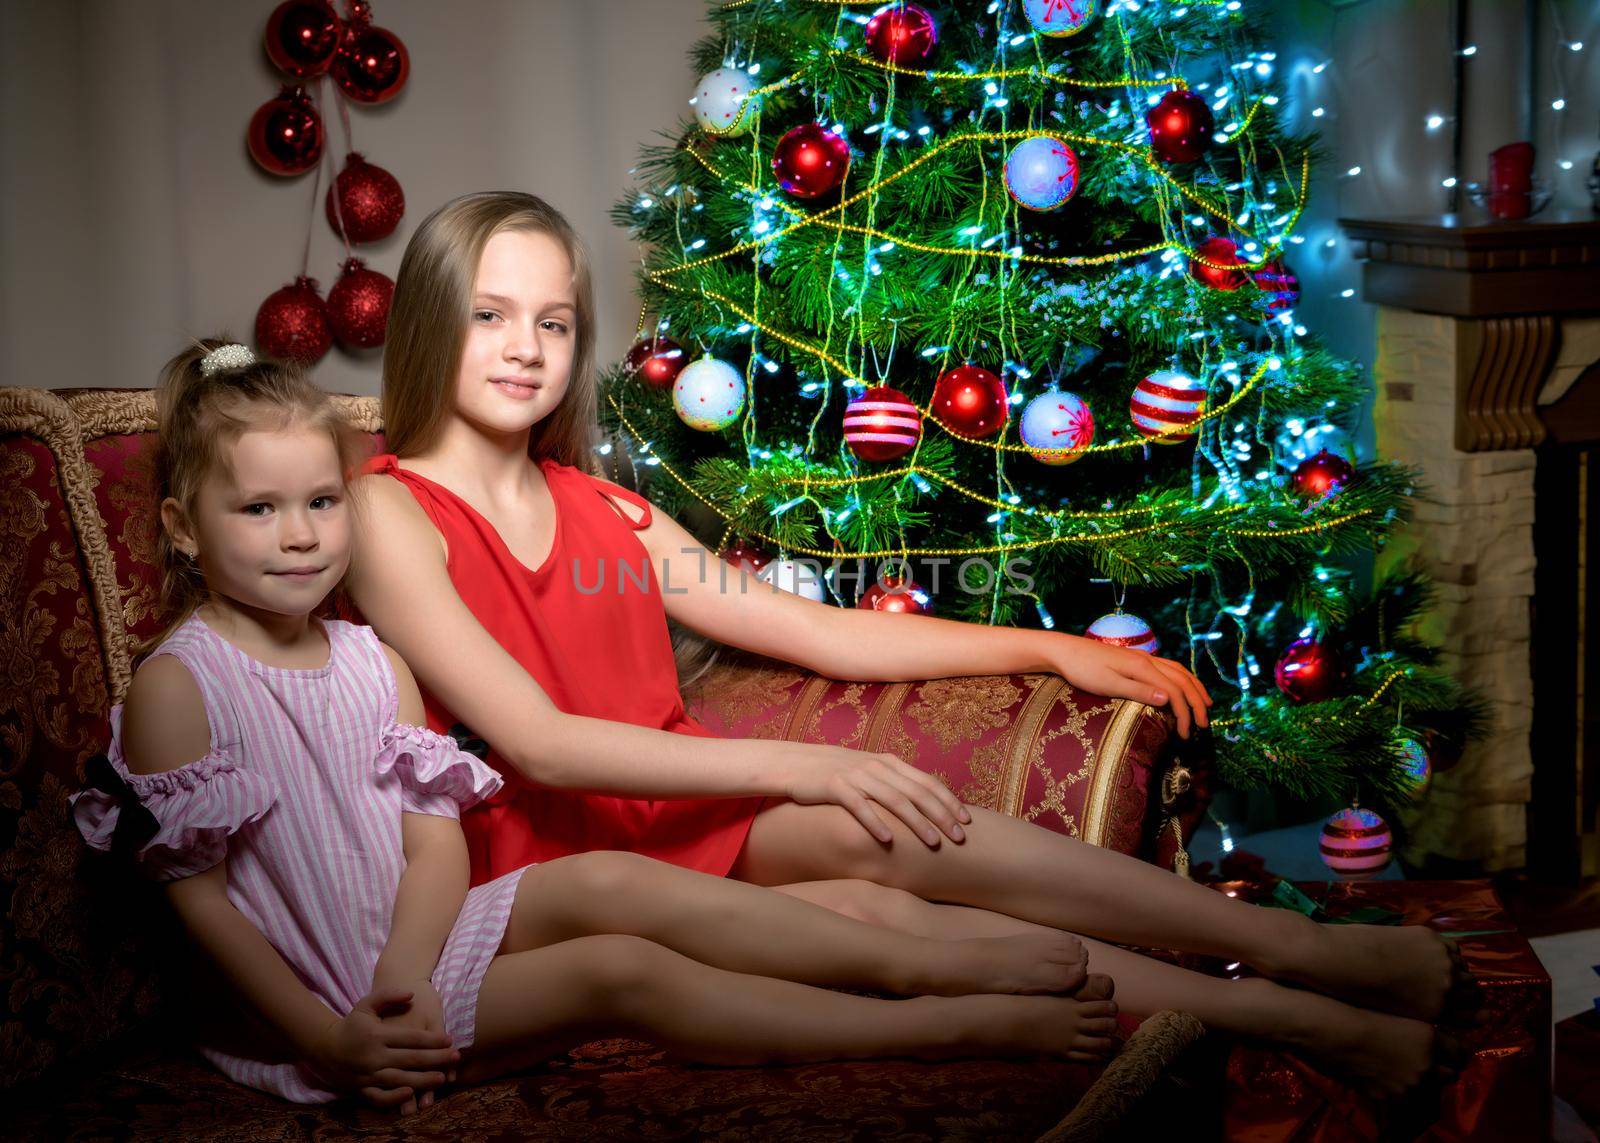 Lovely little girls on a Christmas night near the Christmas tree by kolesnikov_studio